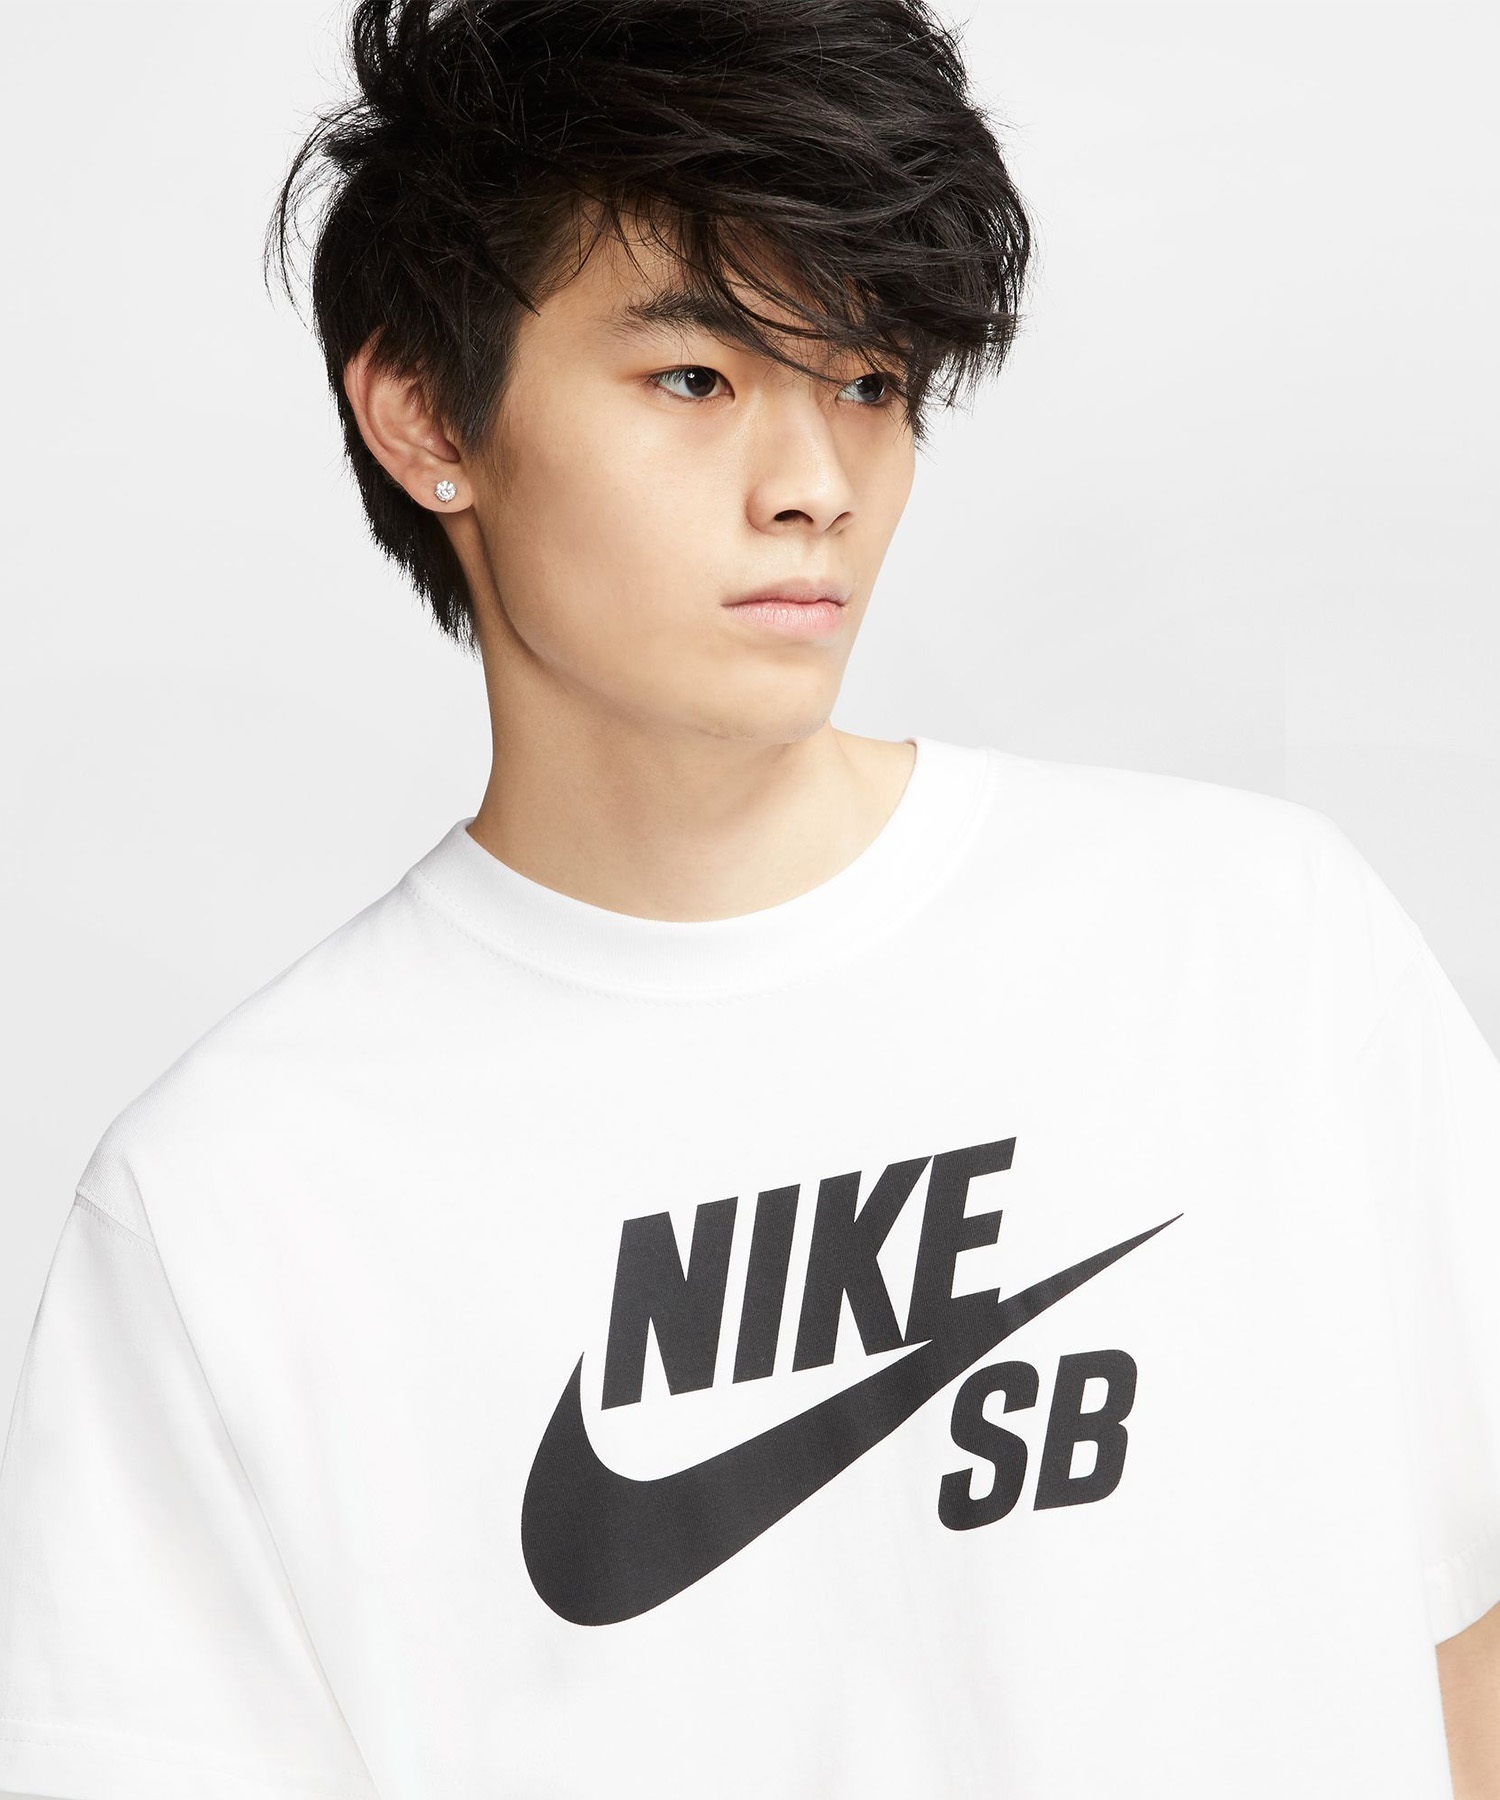 NIKE SB/ナイキエスビー ロゴ スケートボード メンズ 半袖 Tシャツ ホワイト/ブラック CV7540-100(100-M)